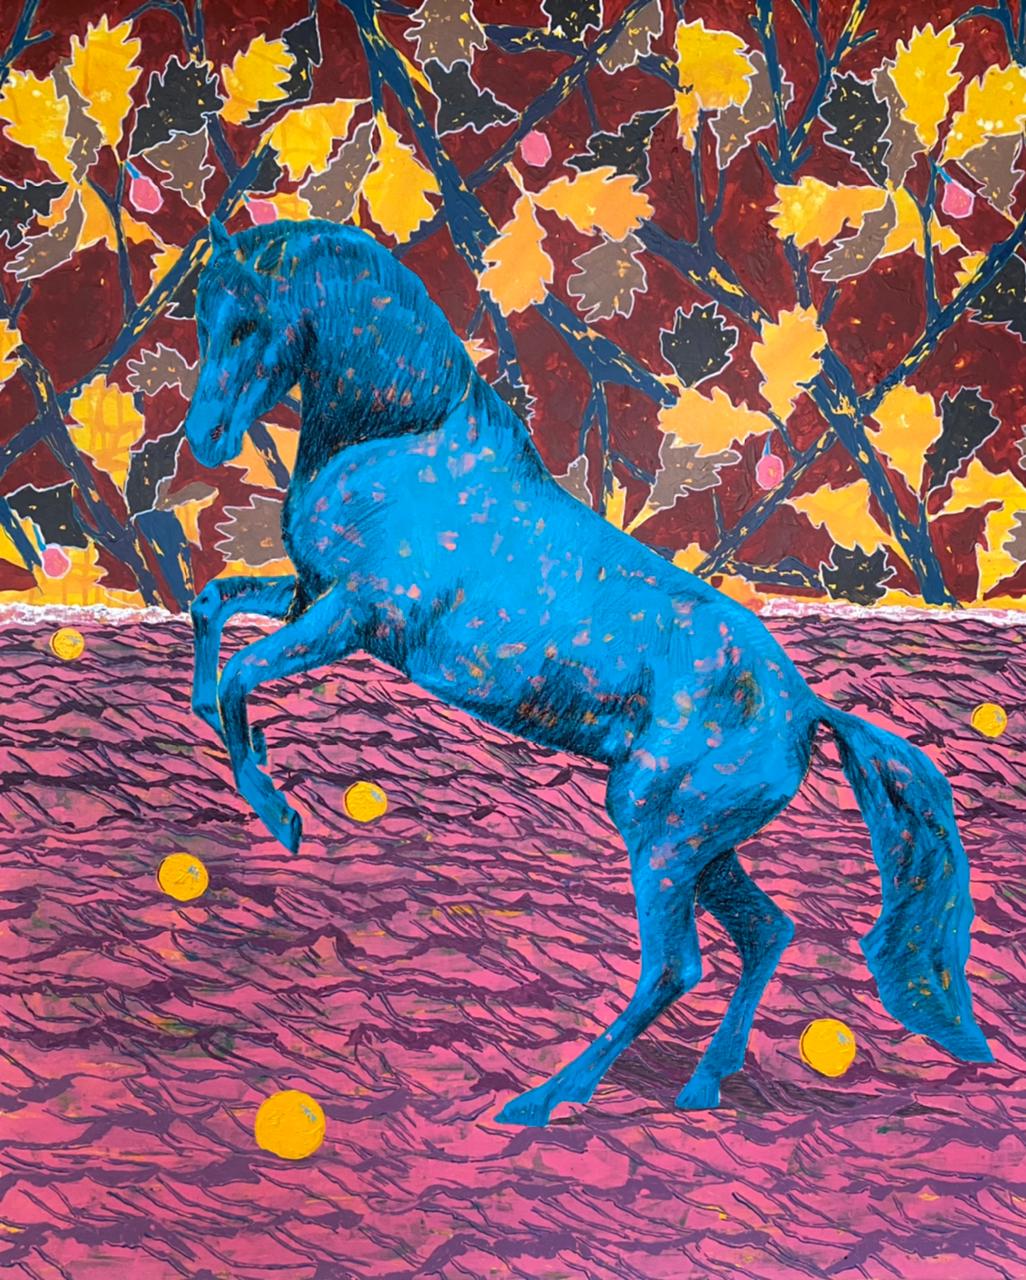 Jamal Bassiouni “Wild at Heart” 2021 120 x 95 cm Acrylic on canvas, JB225